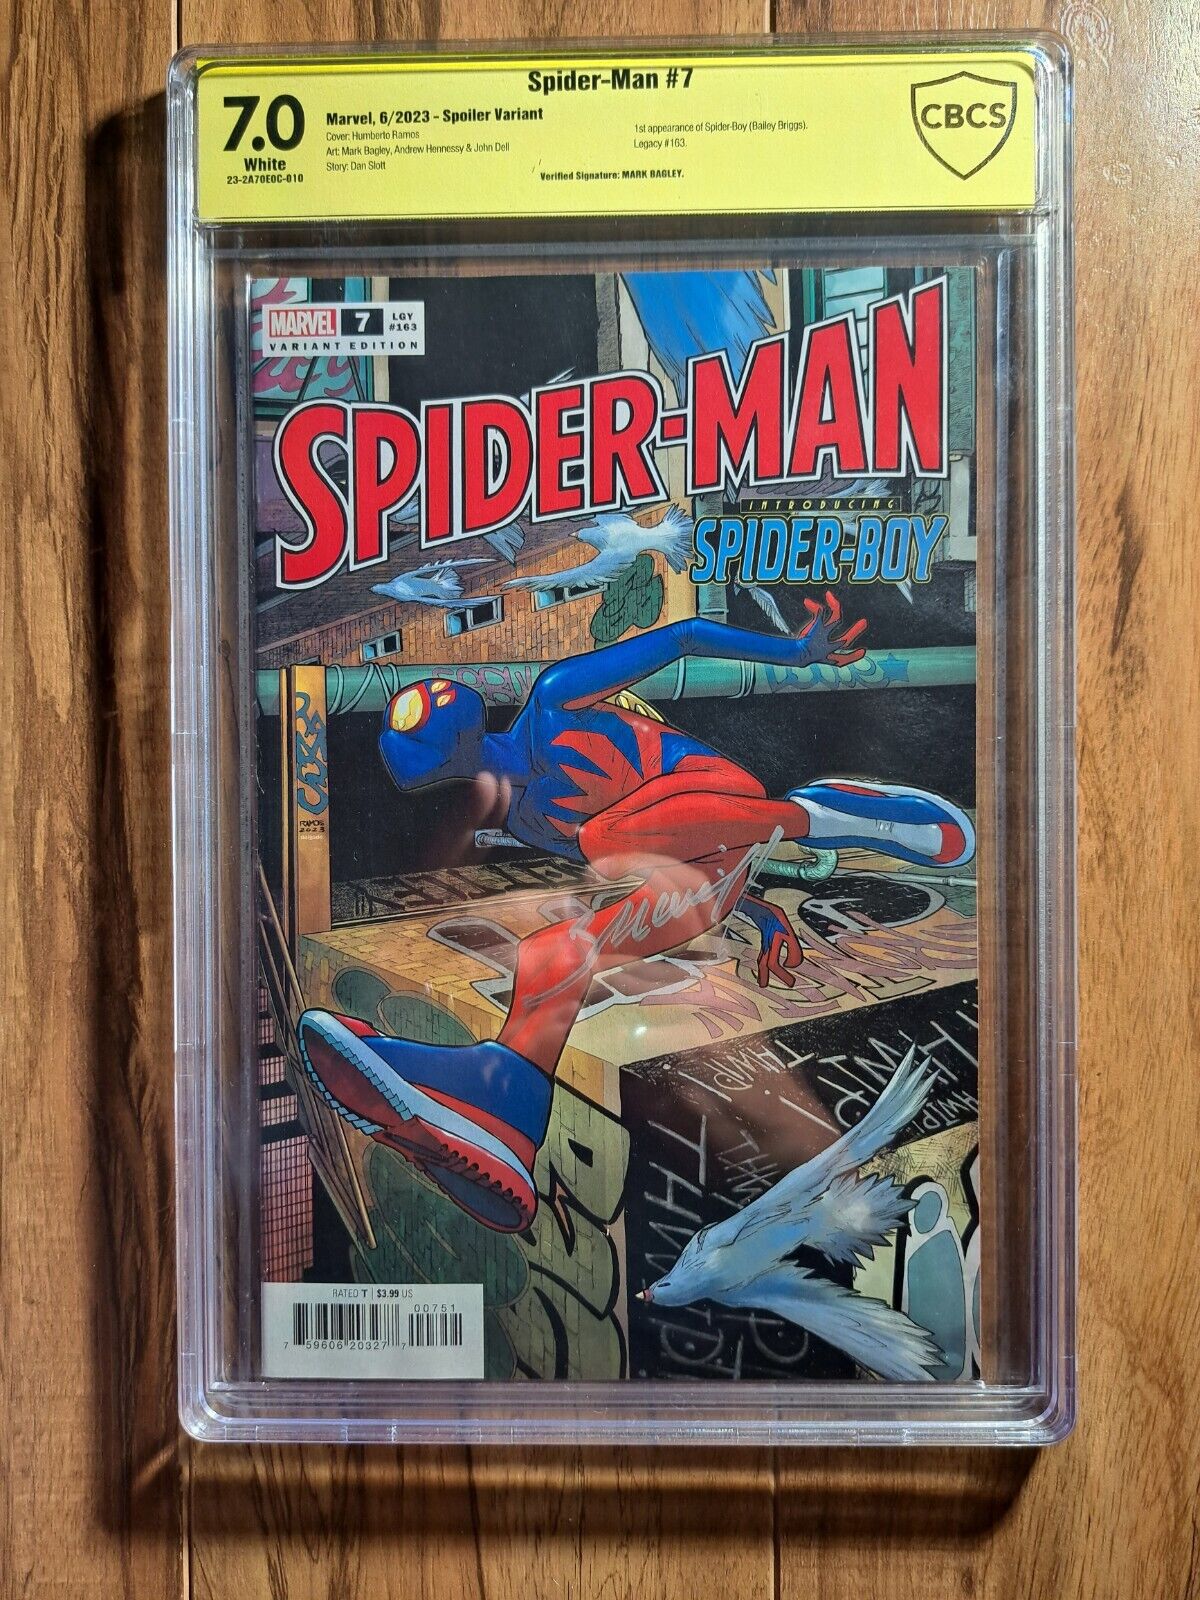 Spiderman #7, First Spider Boy, cgc 7.0, Signed by Mark Bagley